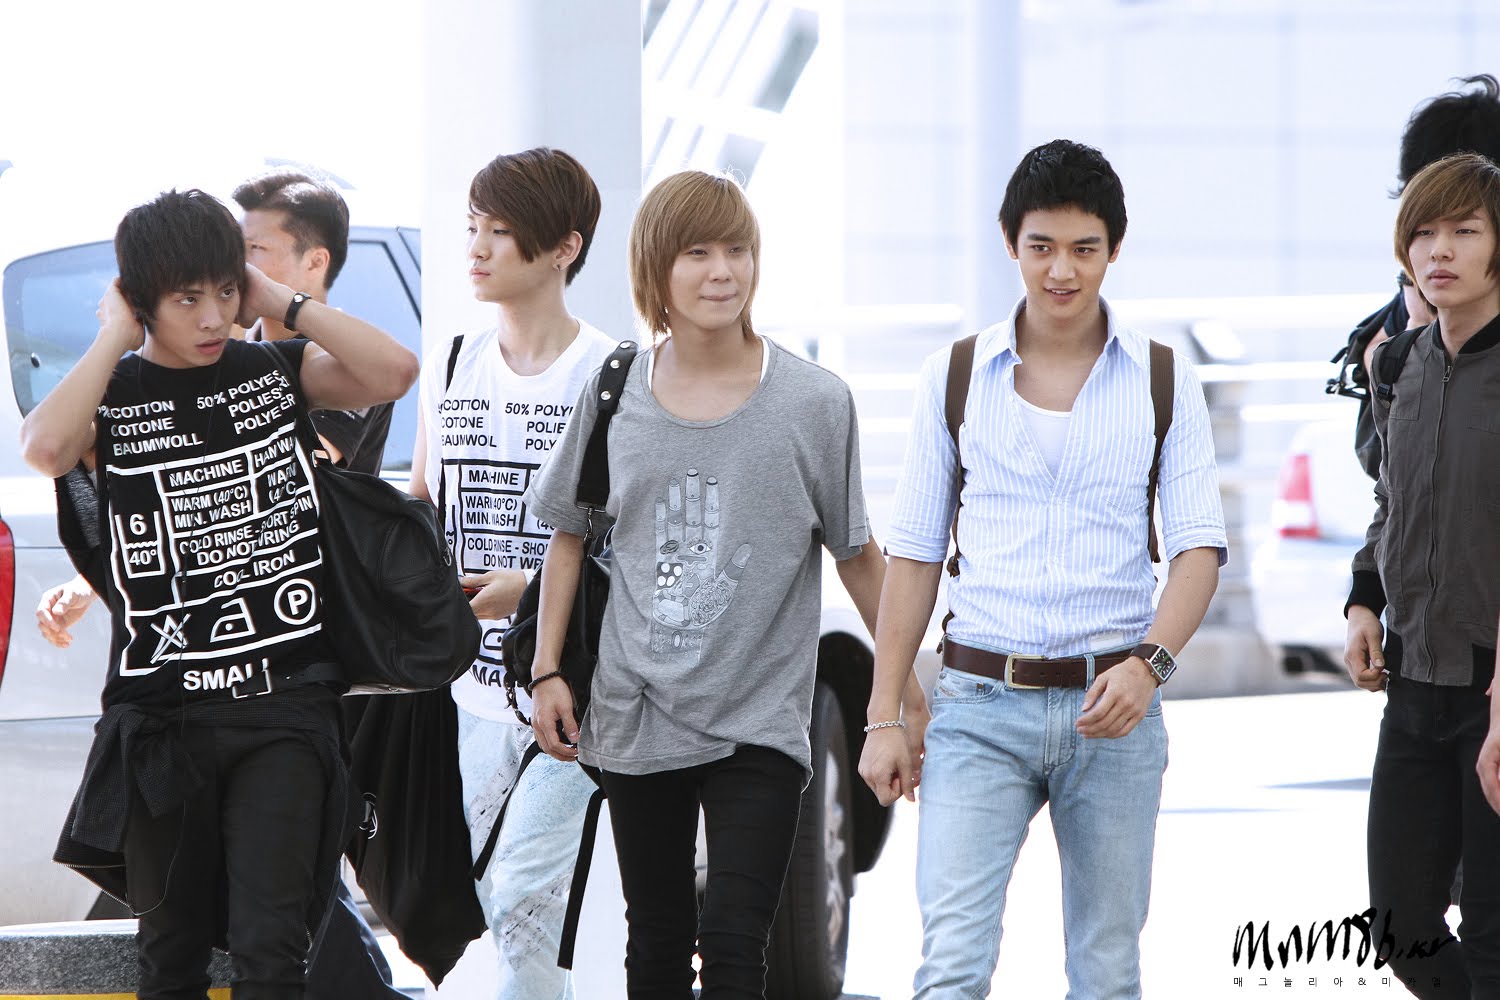 Ace your Airport looks like Kpop idols